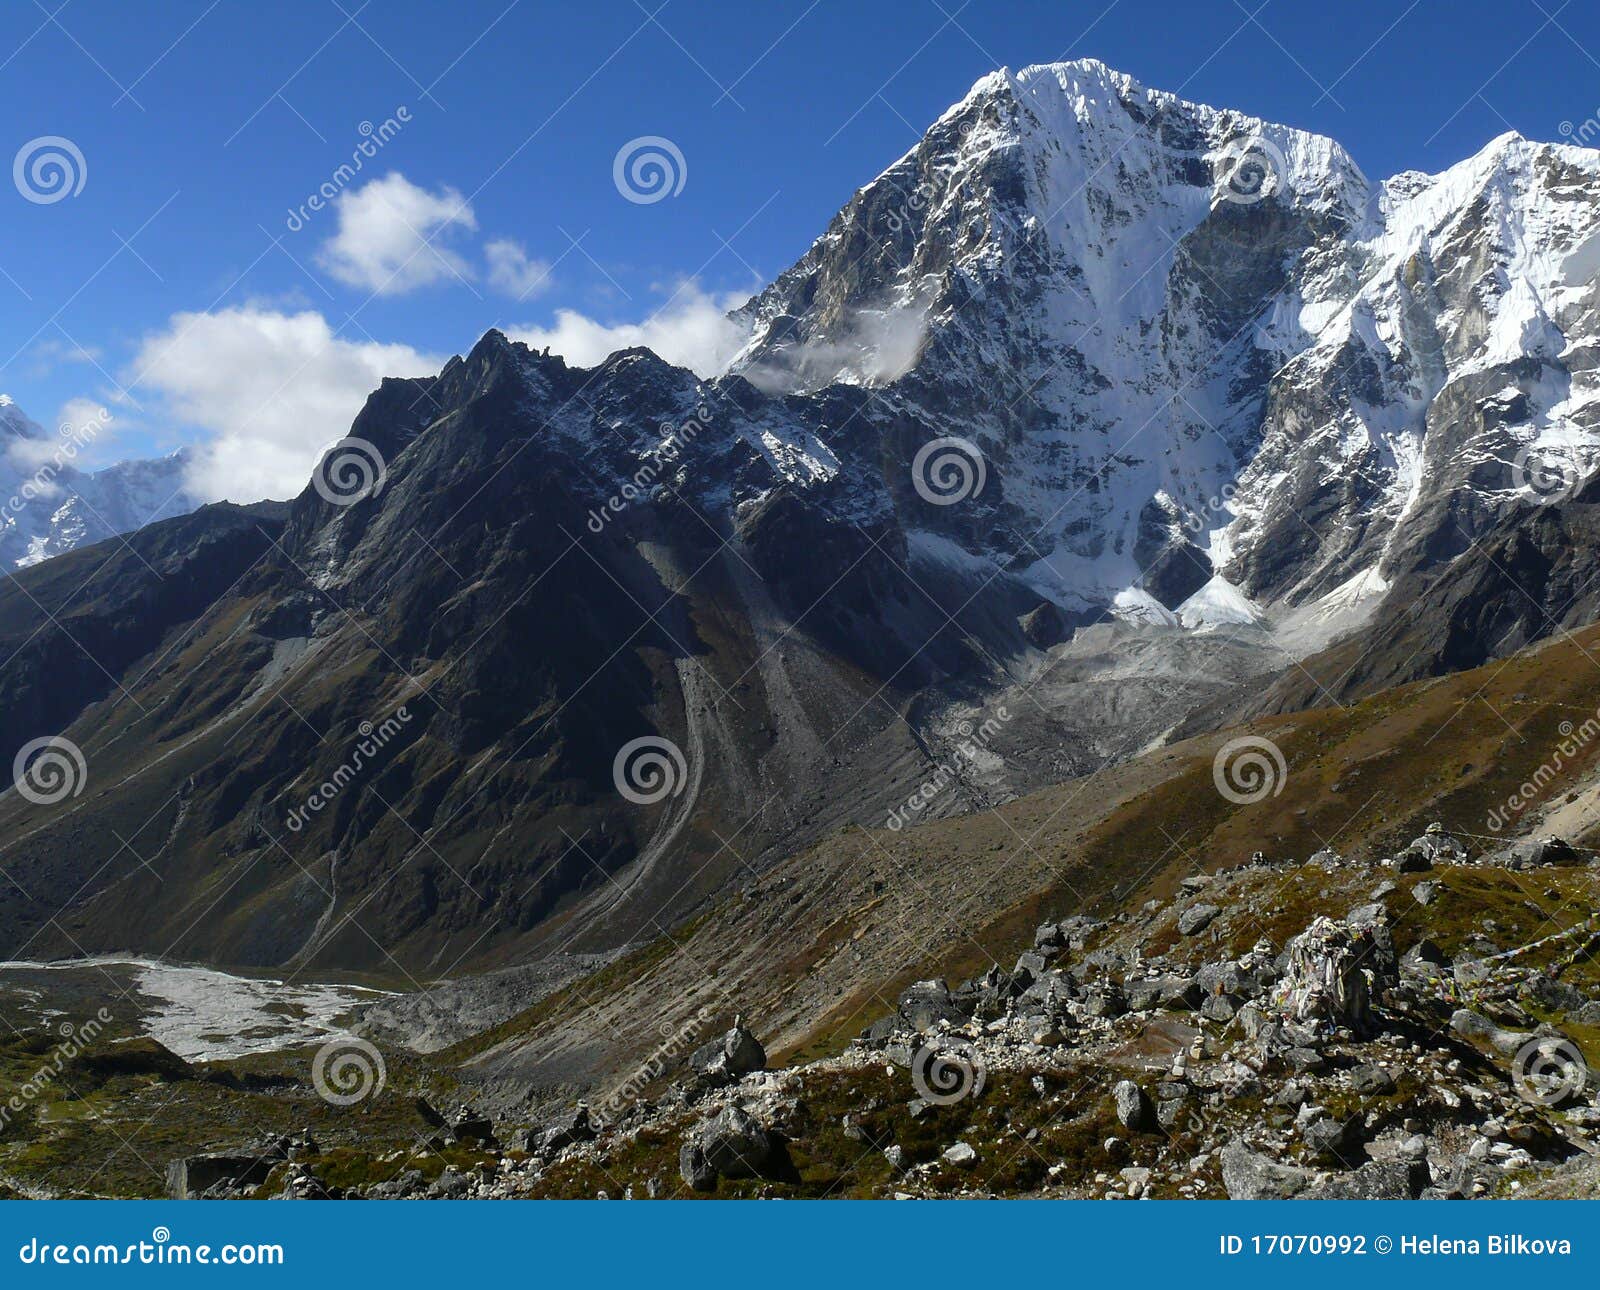 himalayas mountains everest nepal